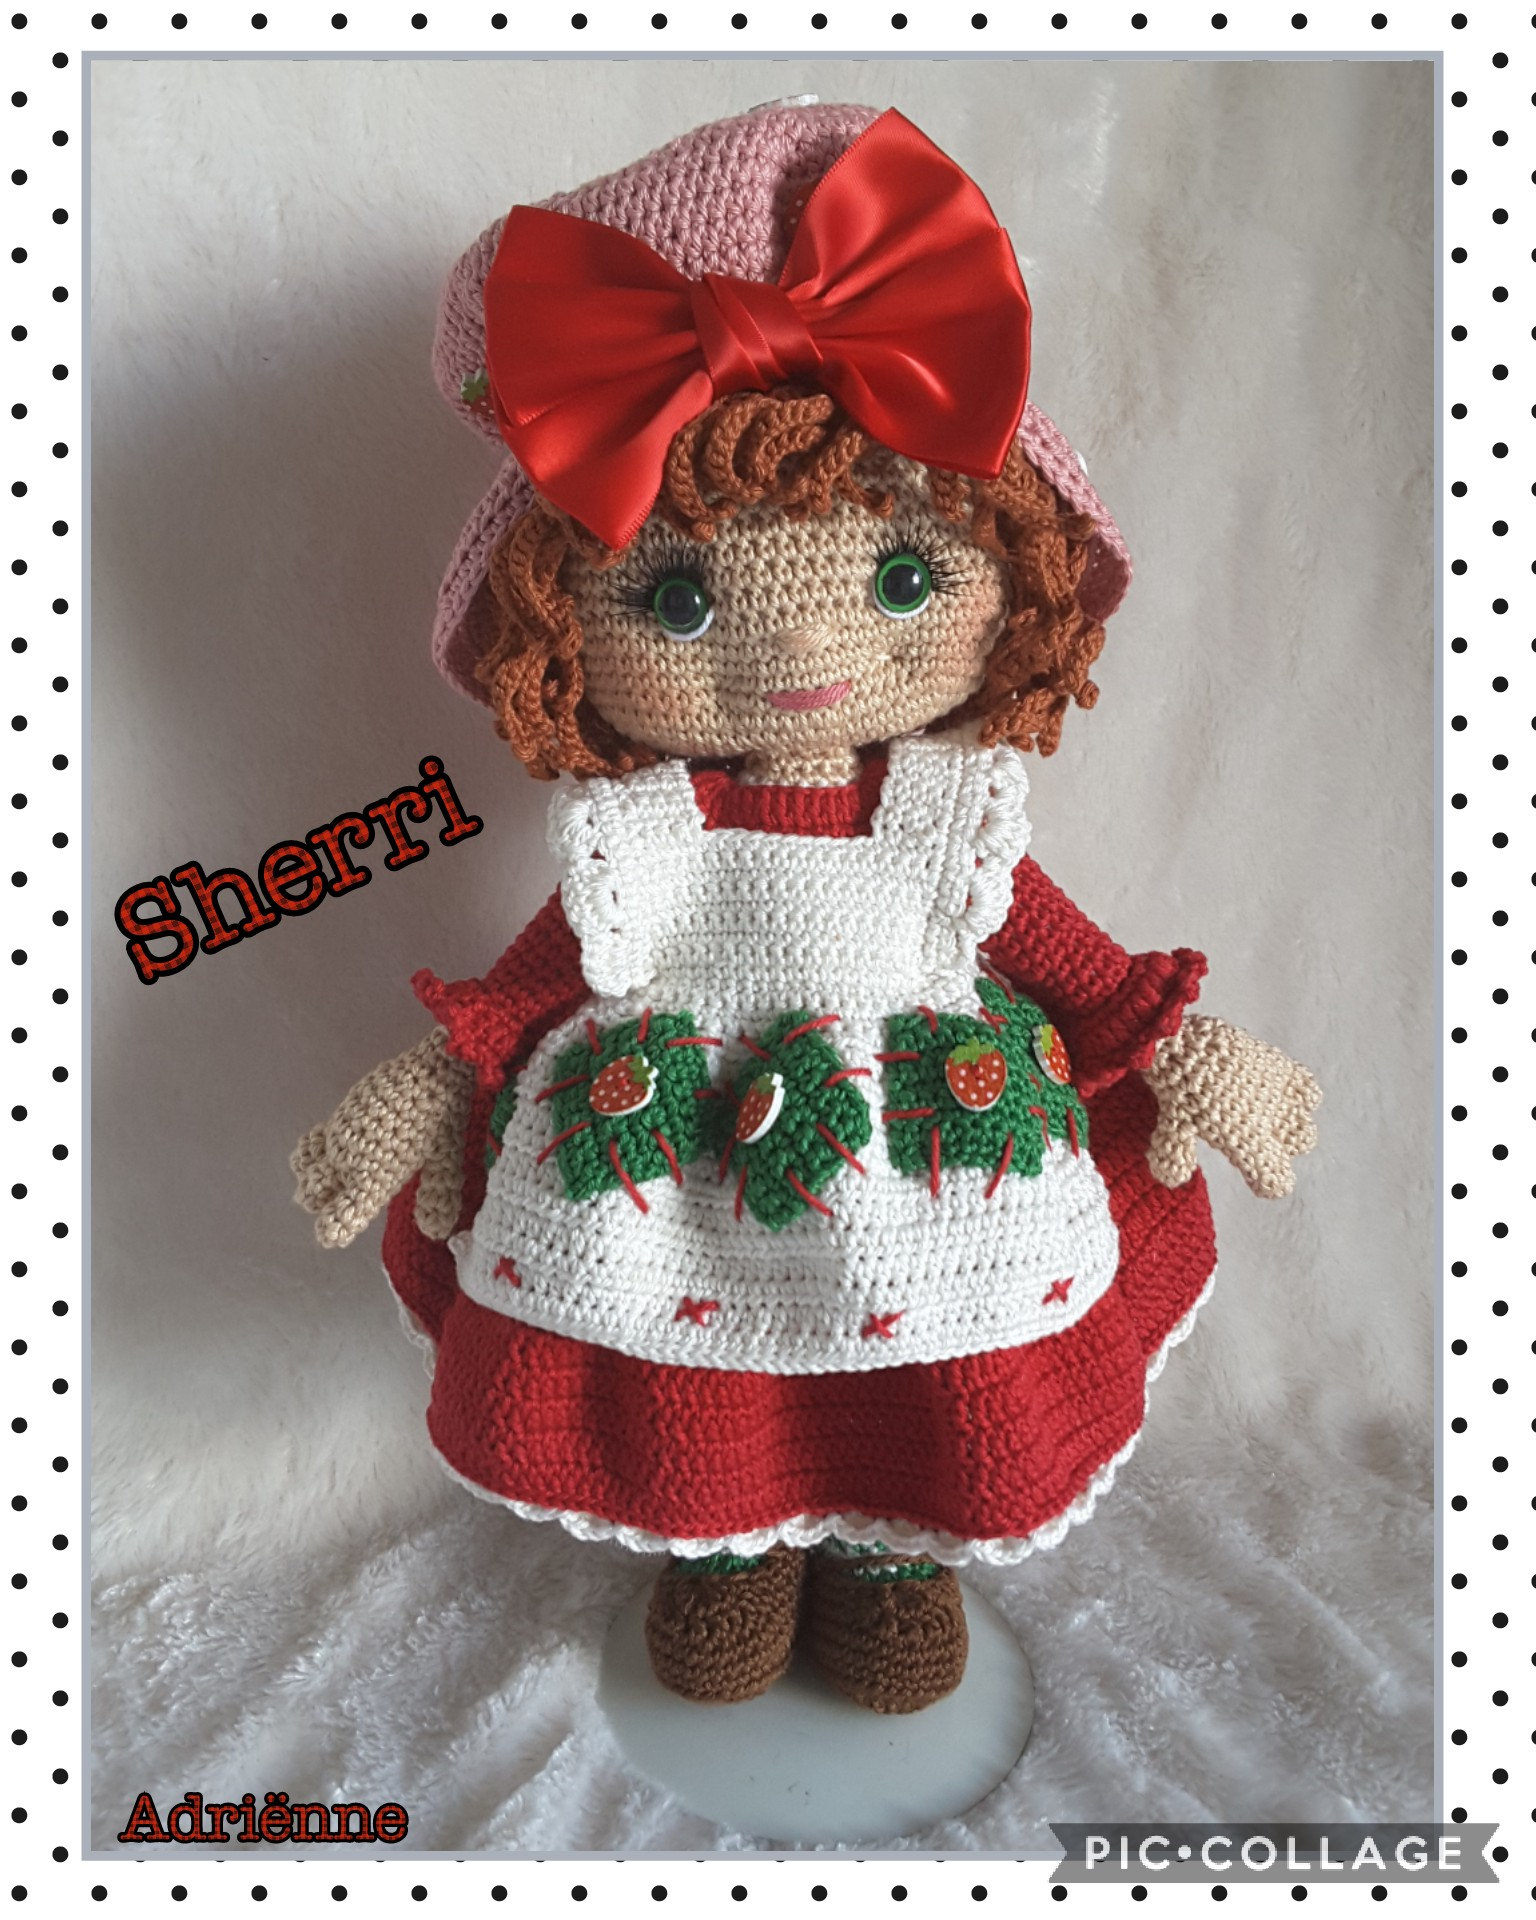 Vintage Crochet Playbabies Doll Patterns Yarn Head Baby Toothie